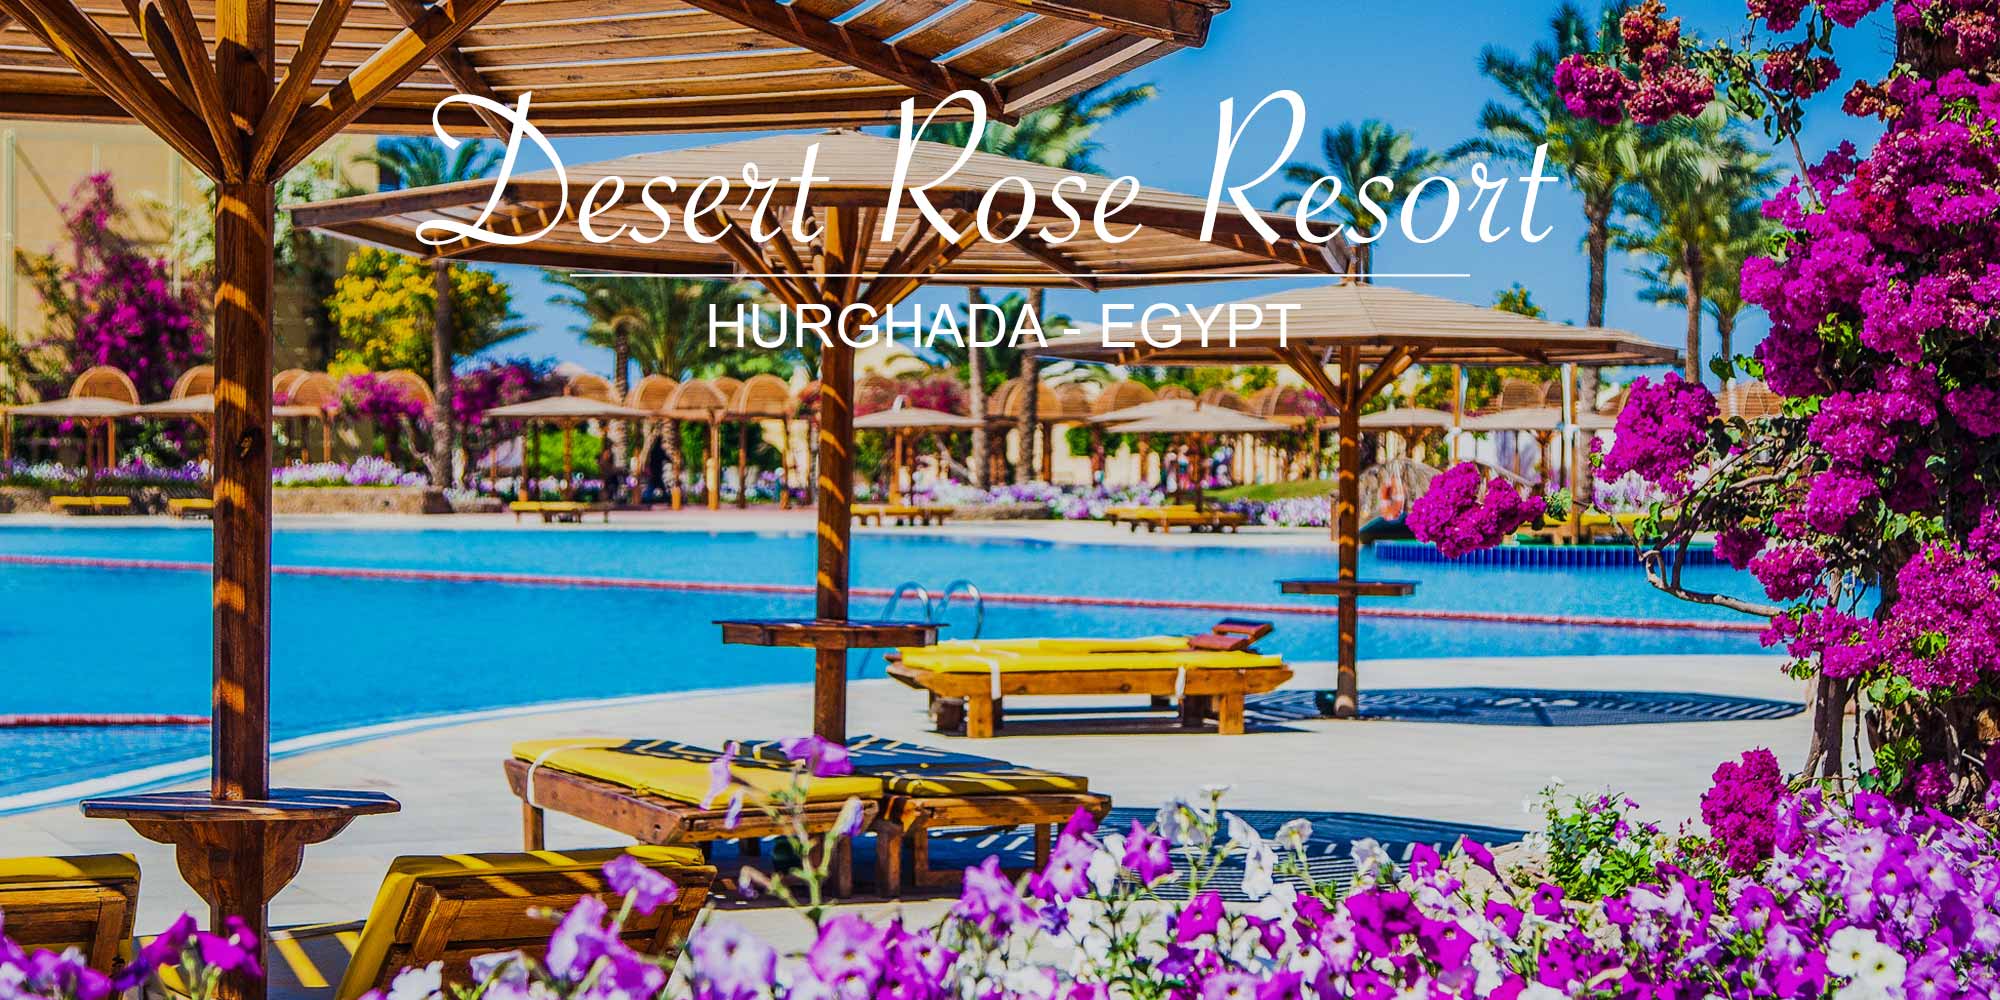 desert rose resort hurghada